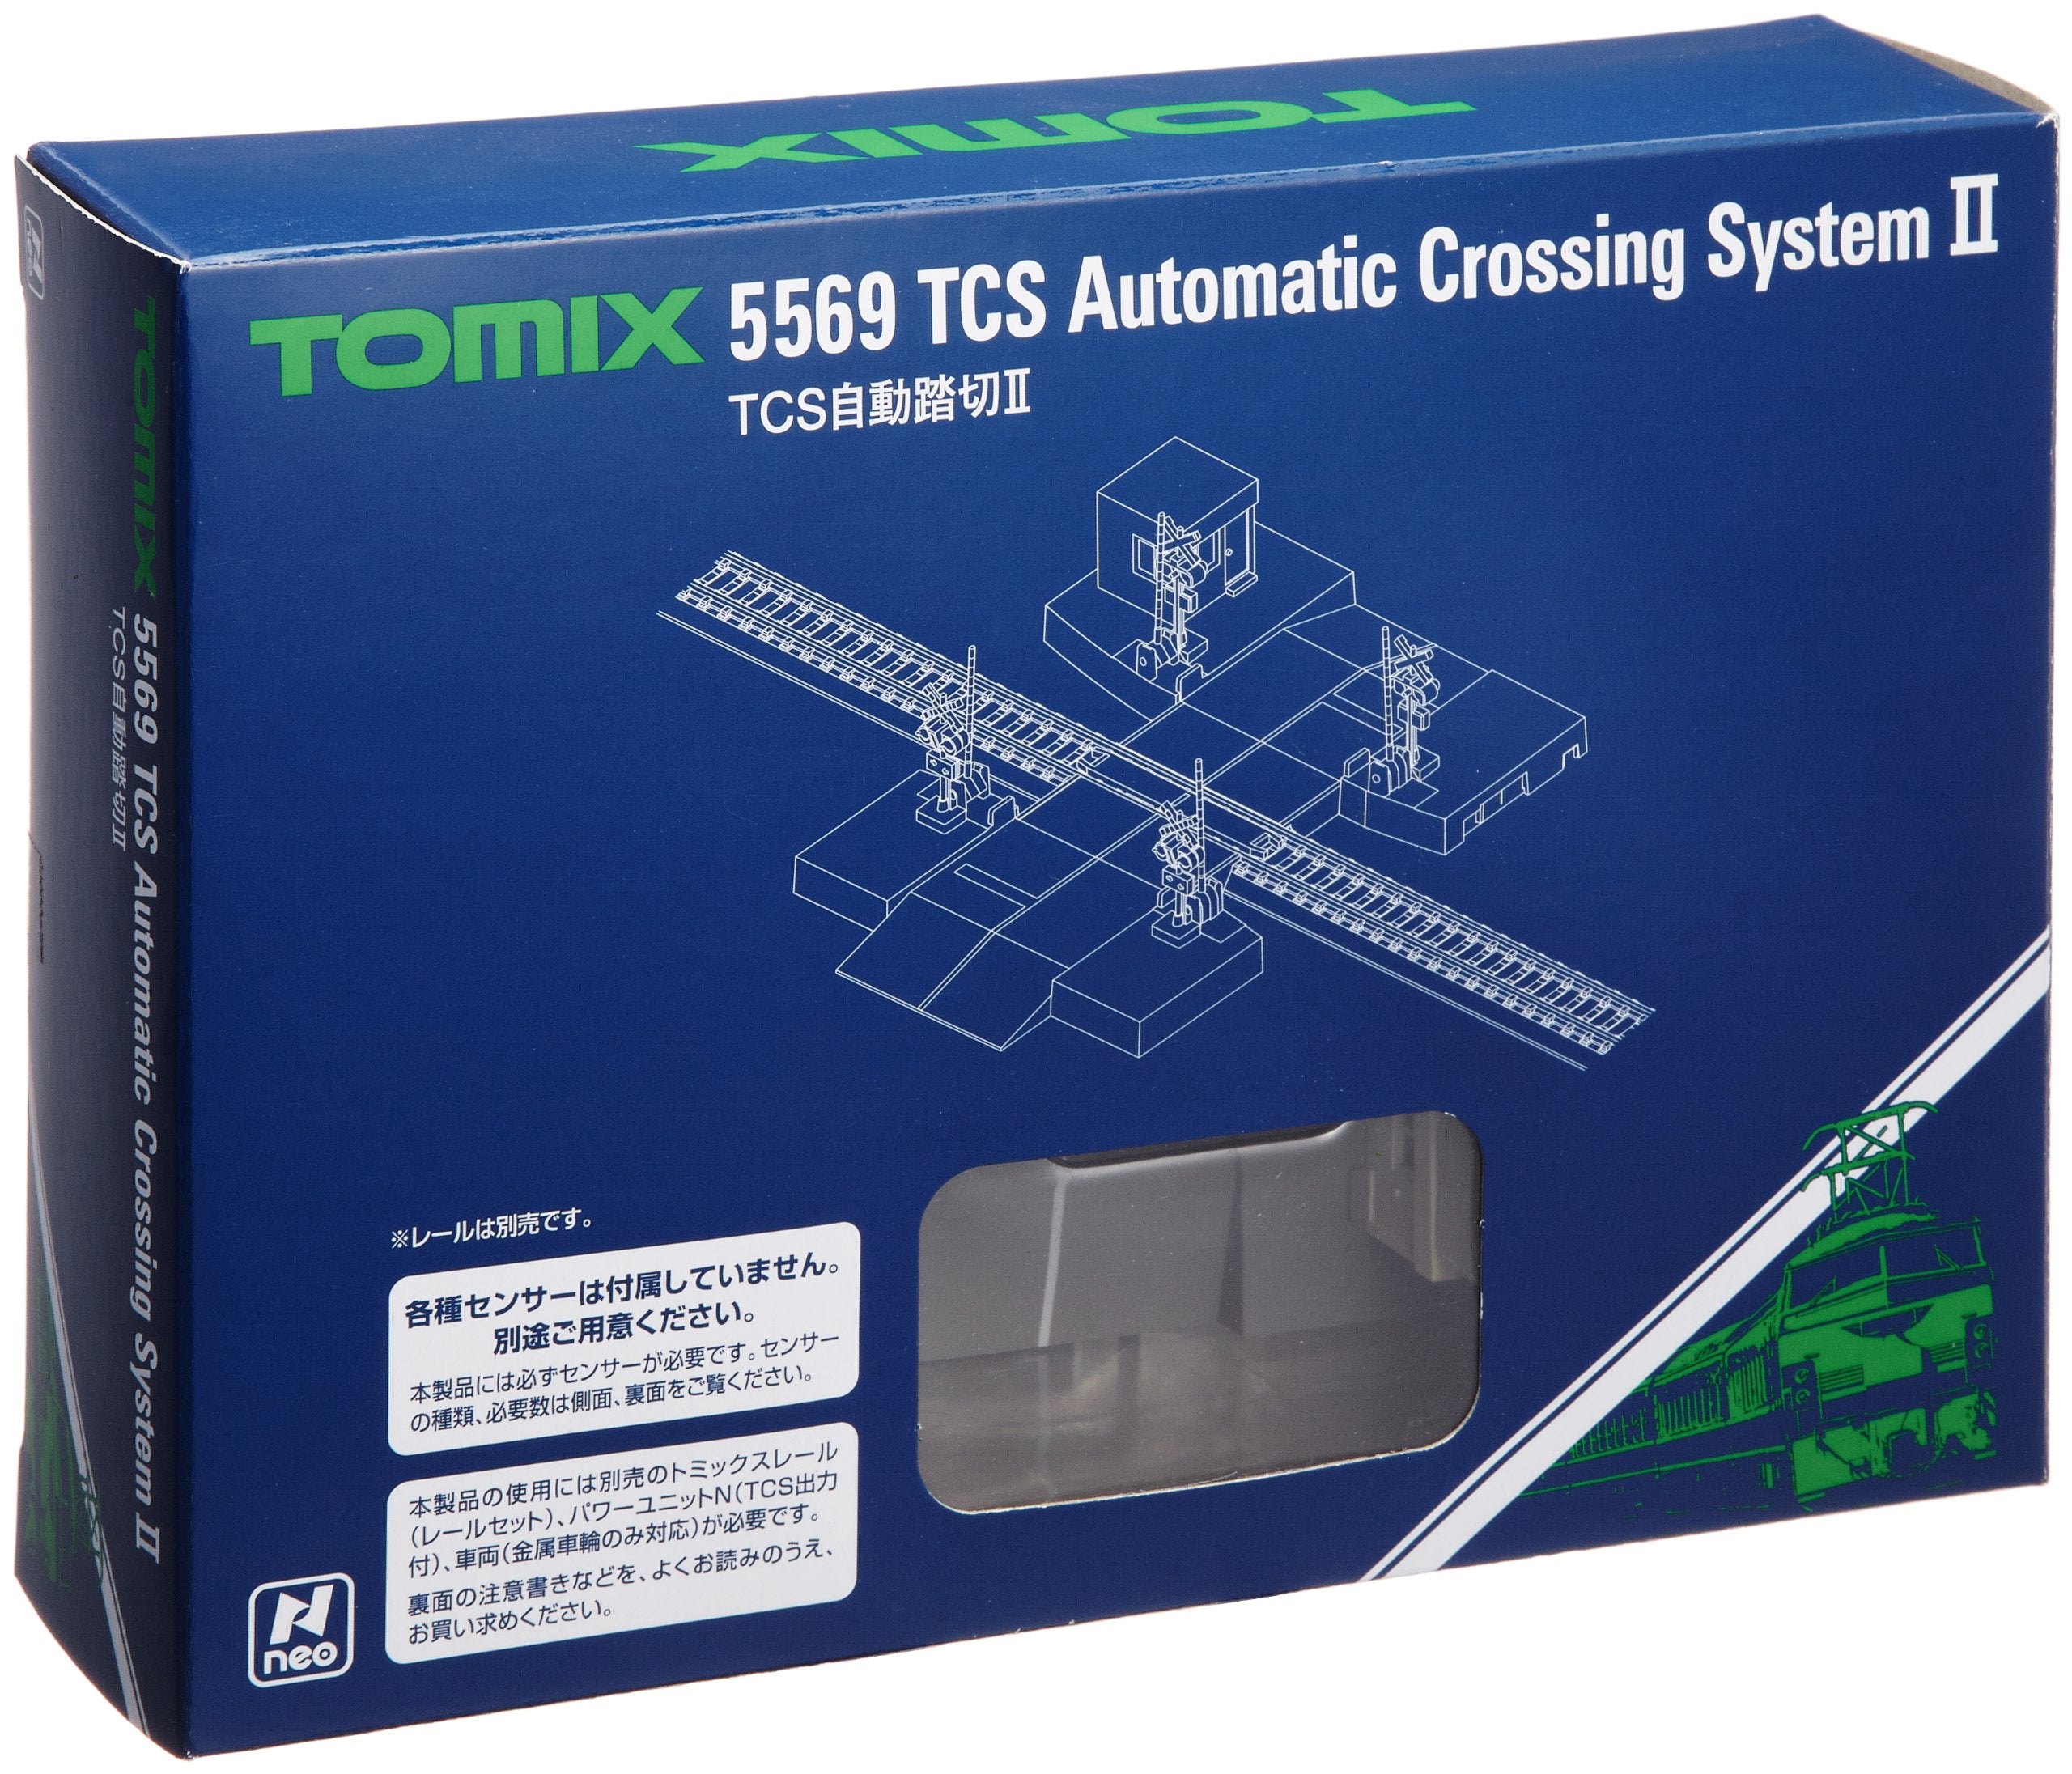 TCS Automatic Crossing System II (F)